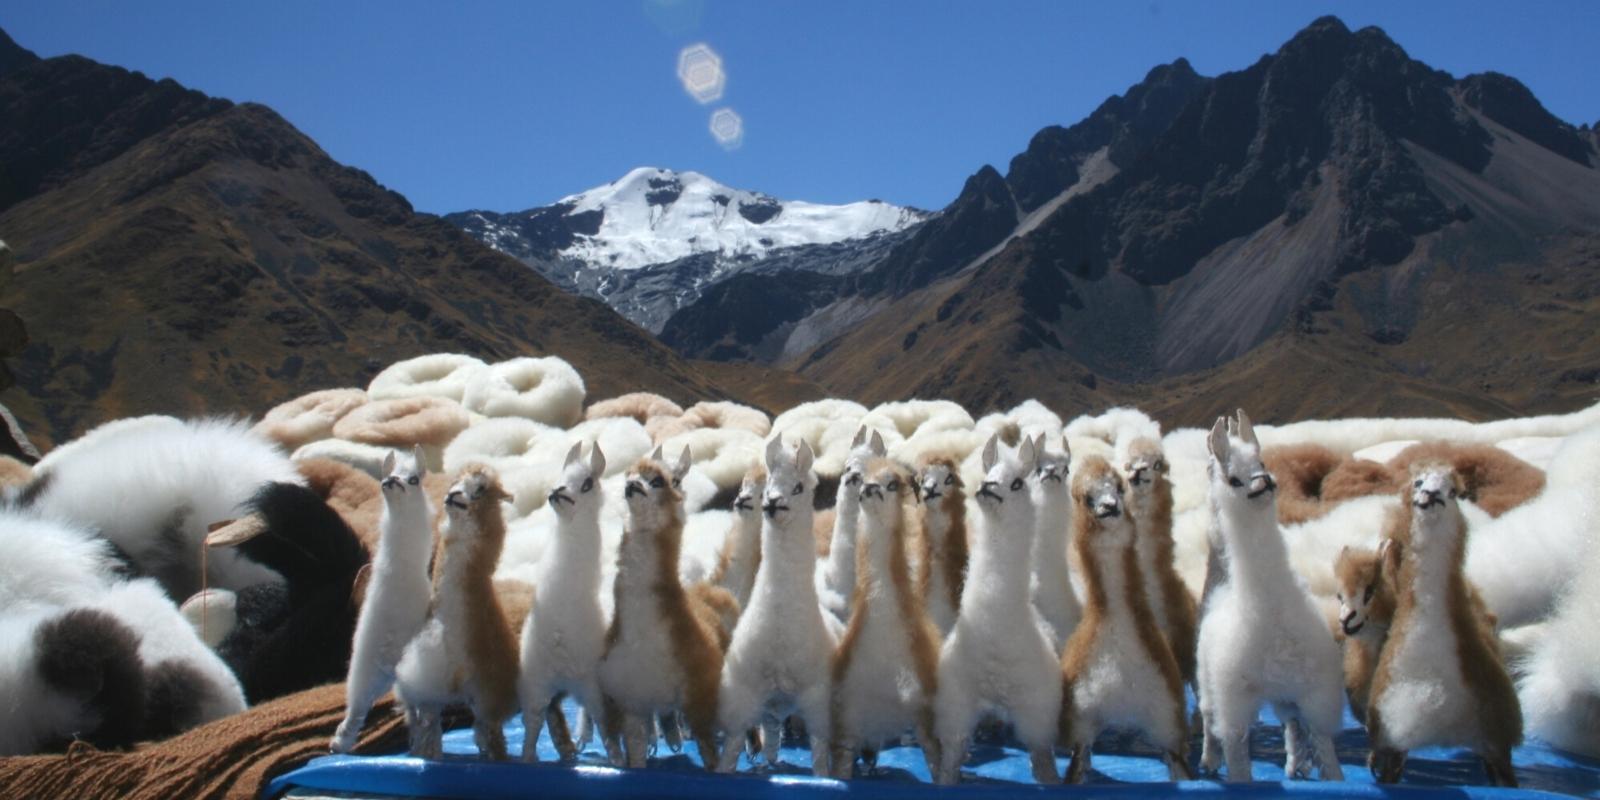 10 best souvenirs of Peru you should to buy , alpaca dolls